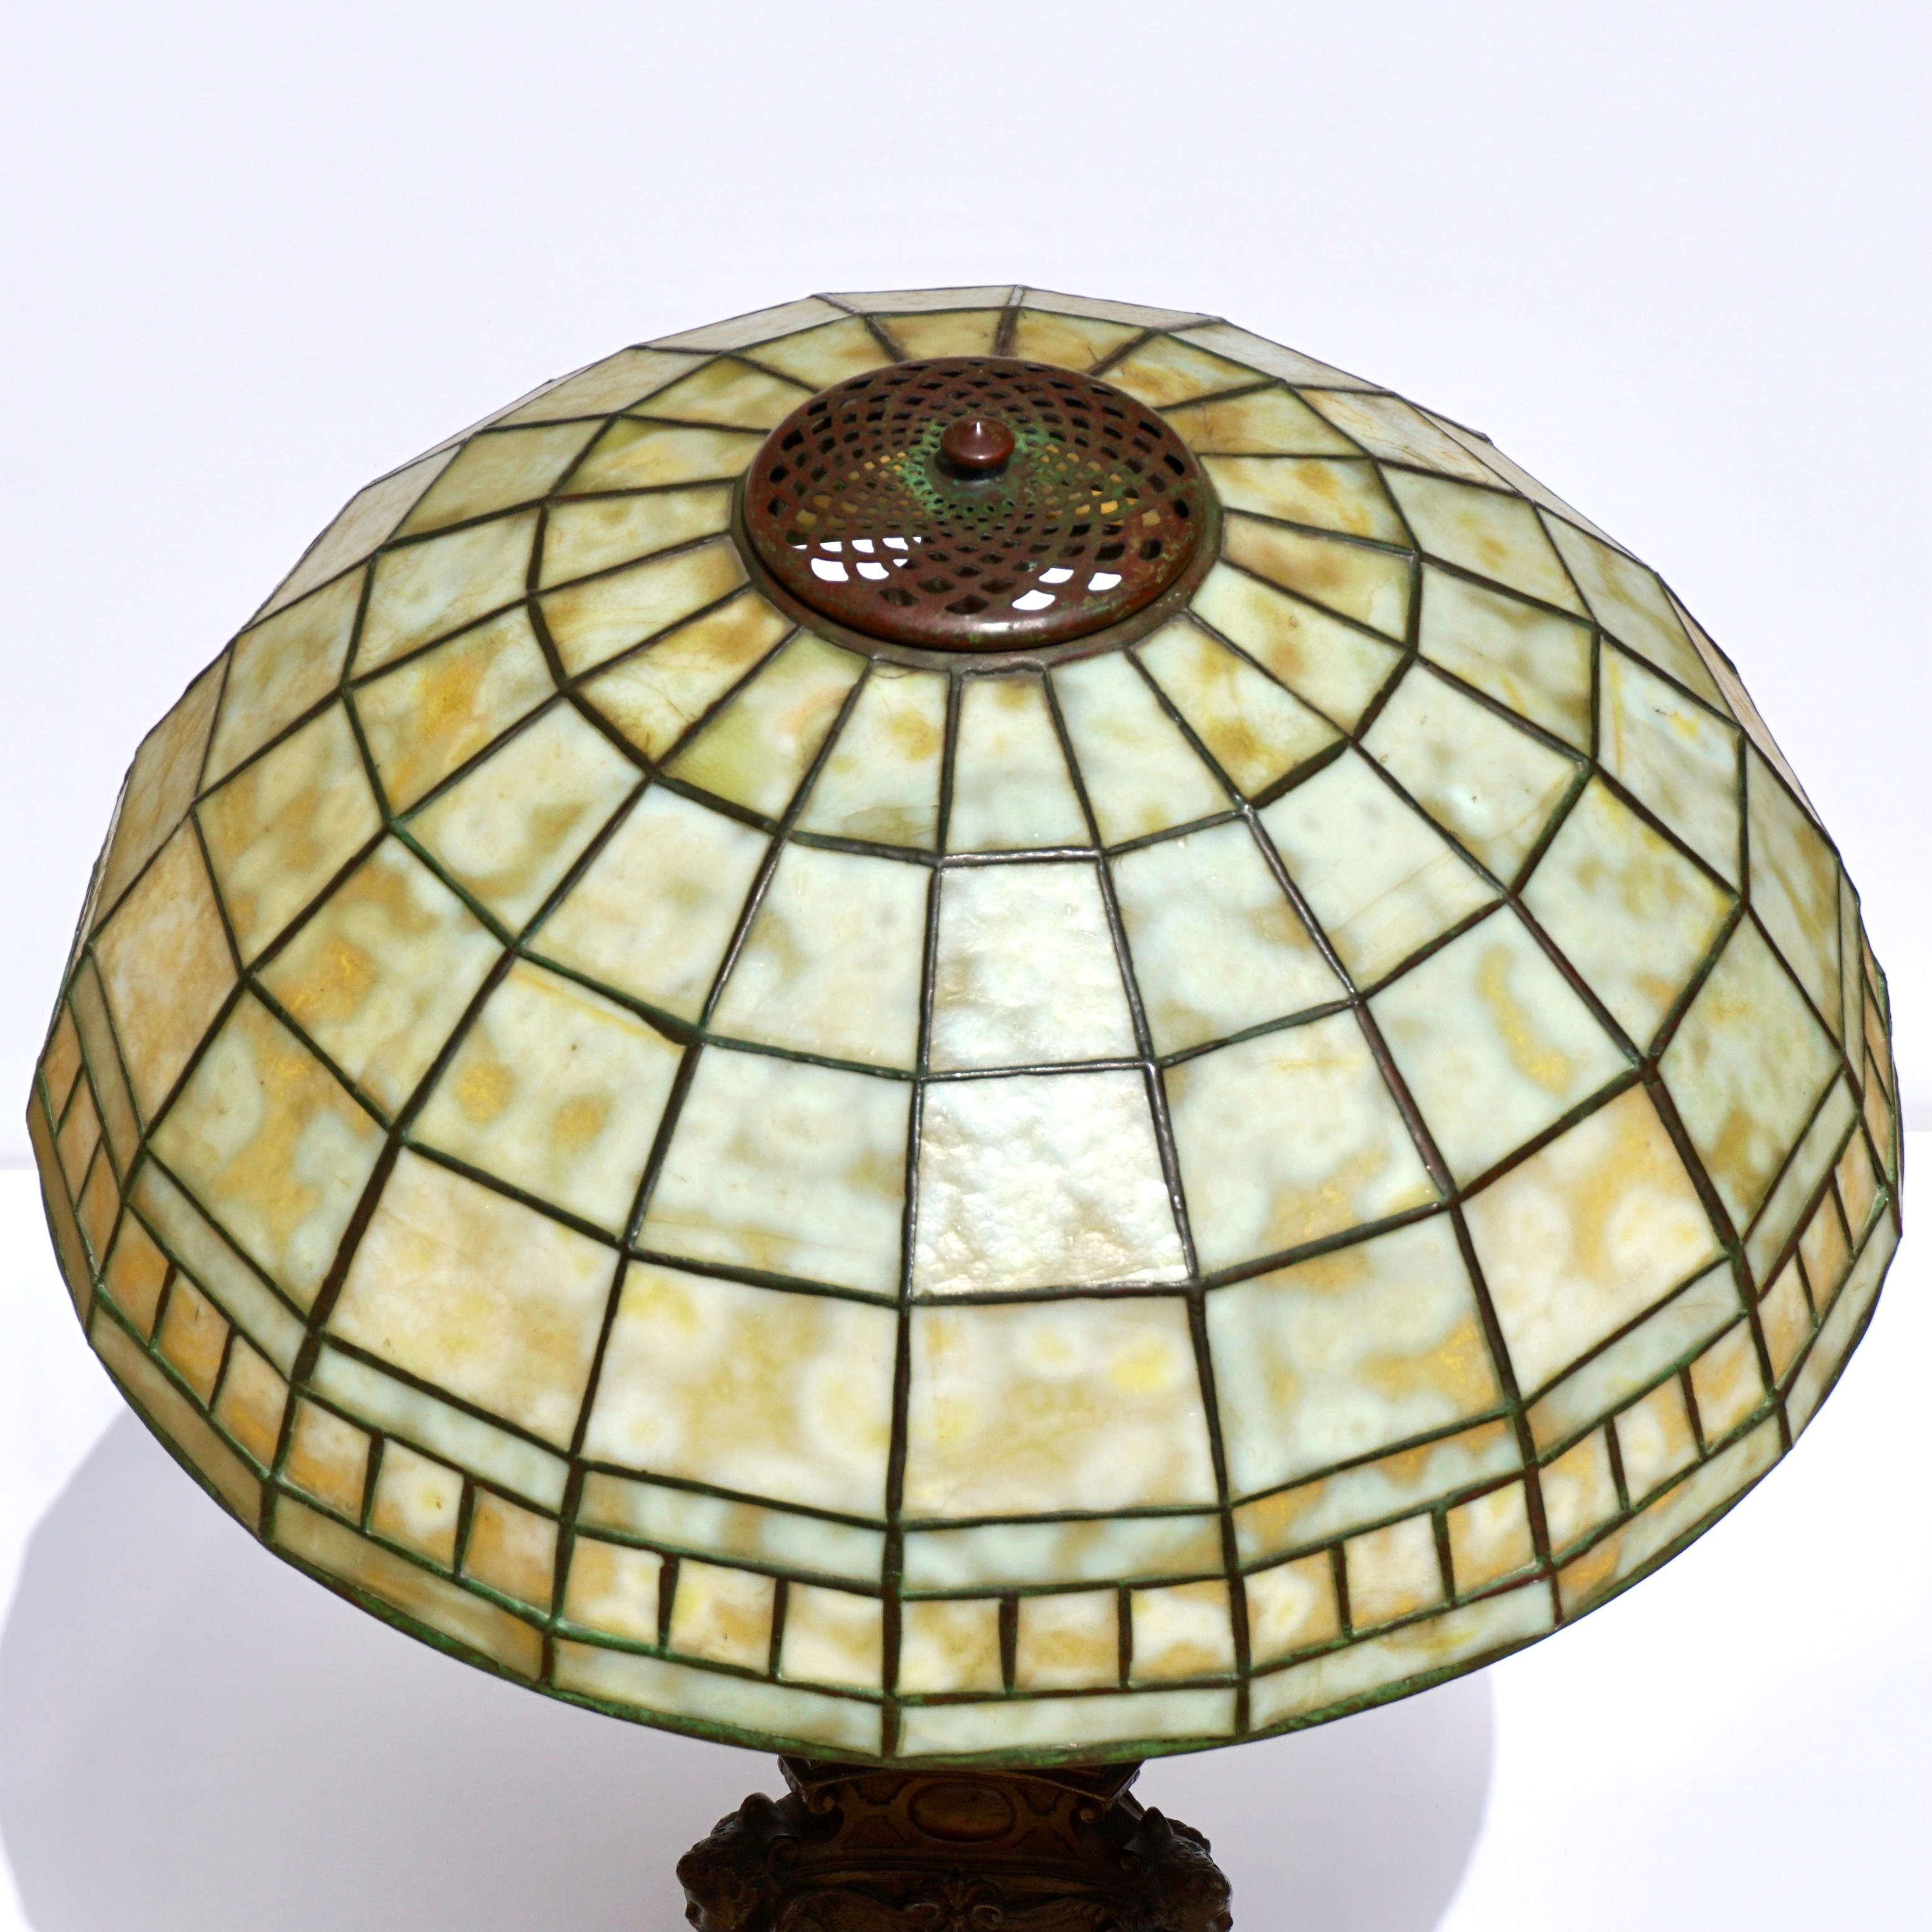 Tiffany Studios - Lampe de table coloniale Bon état - En vente à Dallas, TX